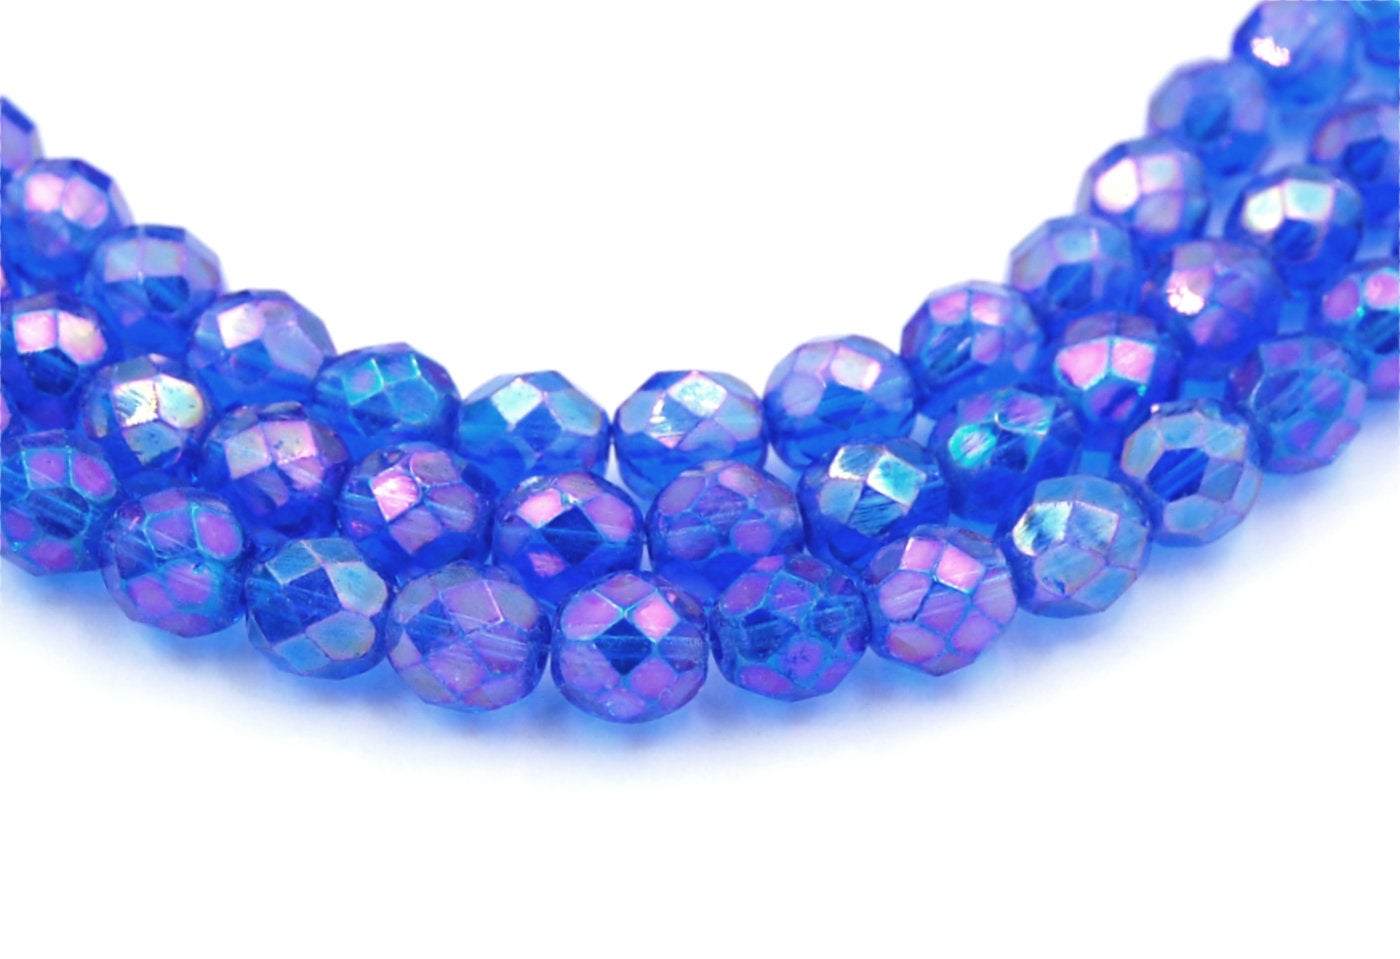 25 Candy 2 Hole 8mm Czech Glass Beads - Jet Rainbow Iris